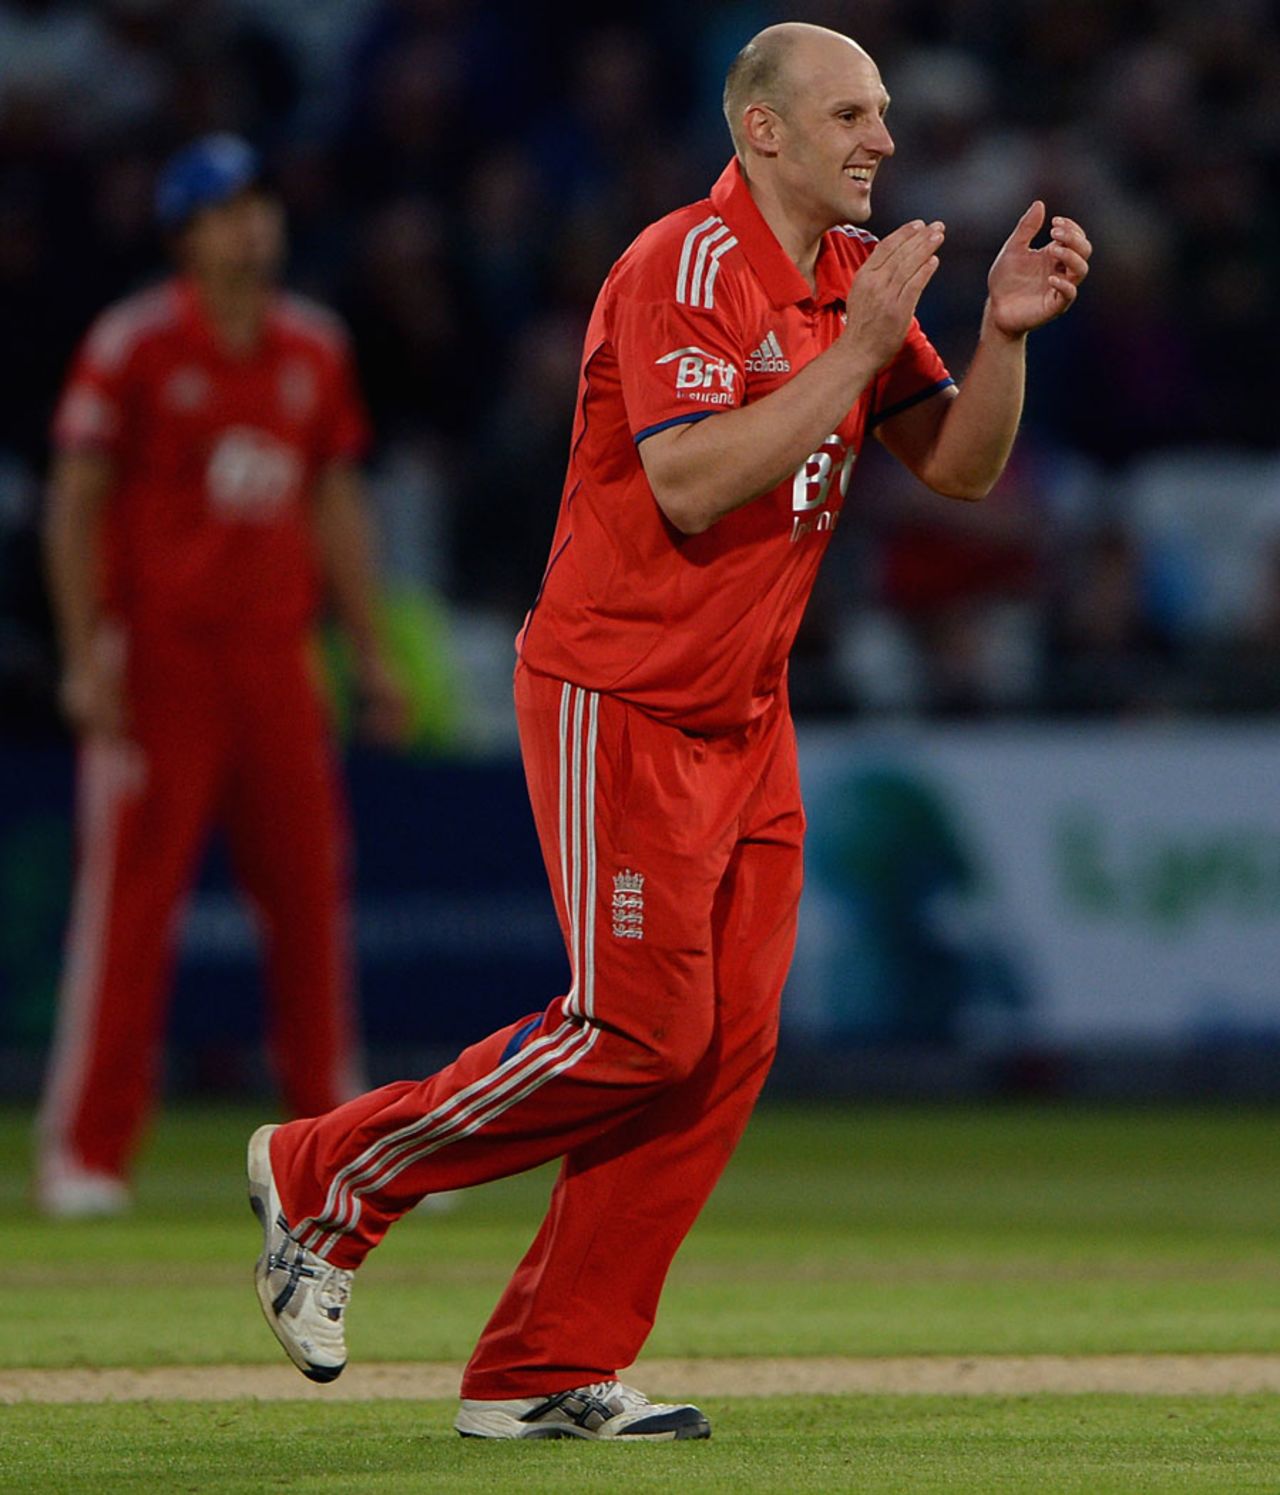 James Tredwell impressed with three wickets, England v New Zealand, 2nd ODI, Trent Bridge, June 5, 2013